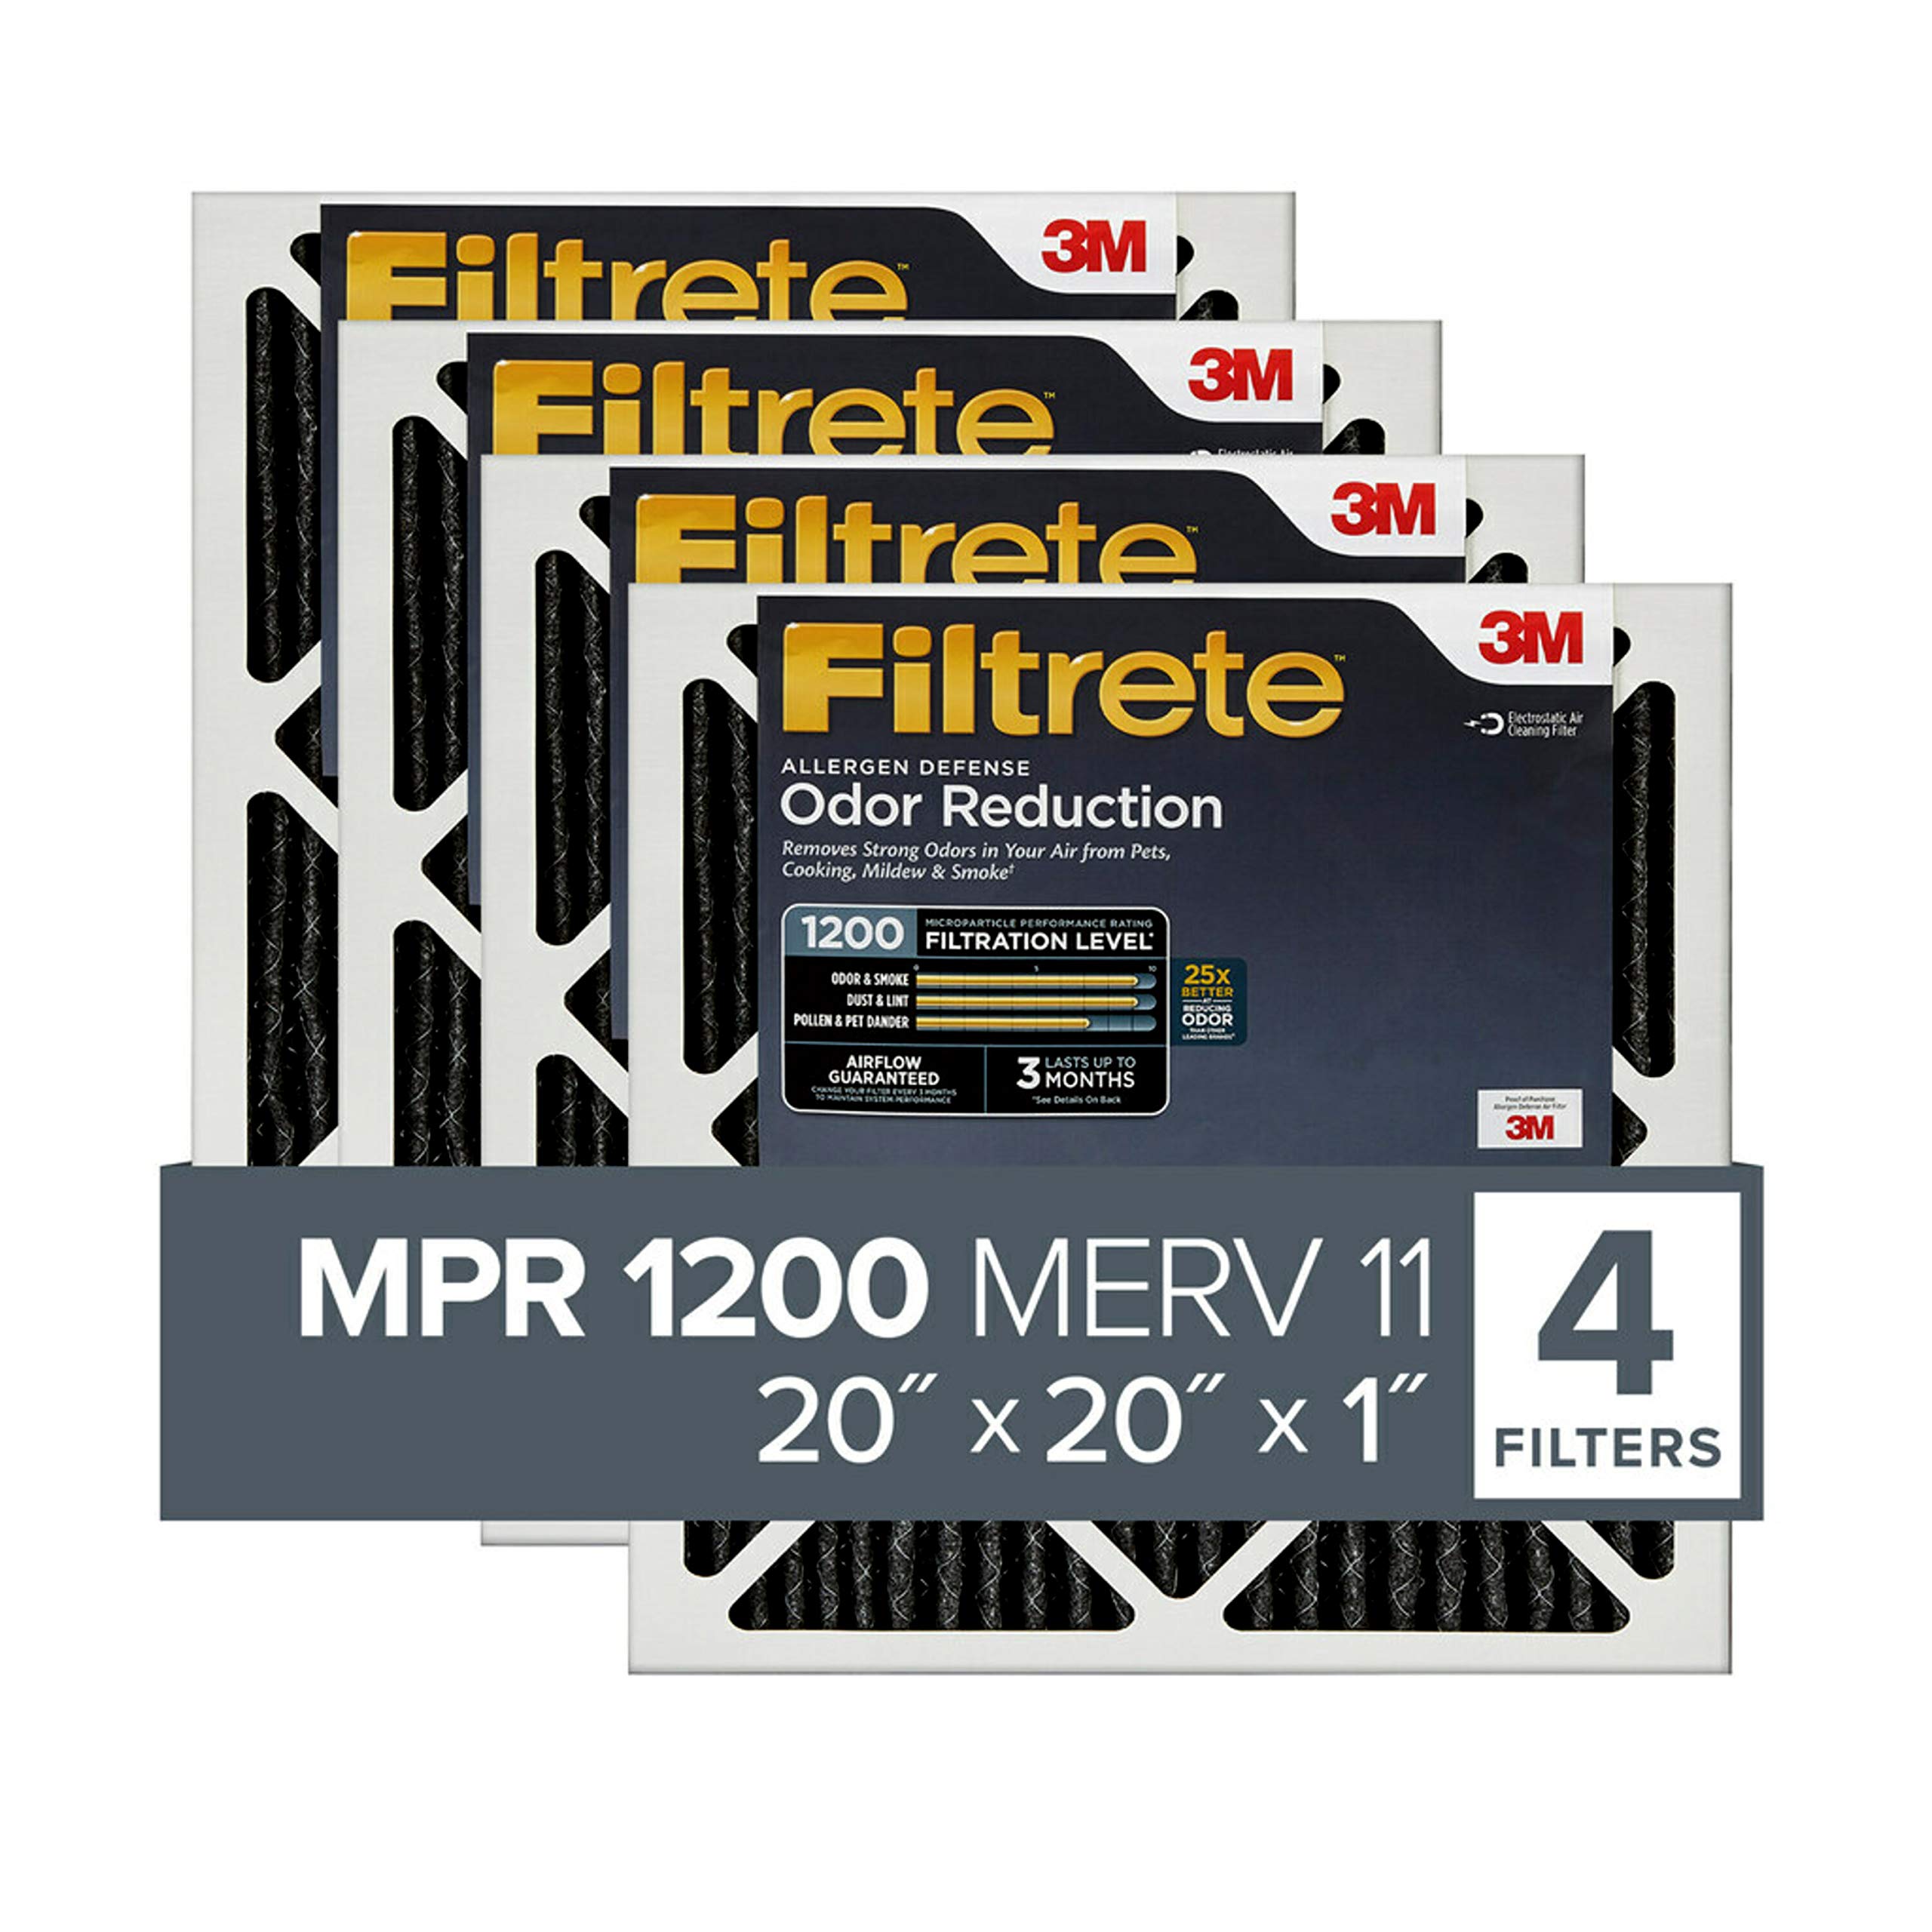 Filtrete 20x20x1 エアフィルター MPR 1200 MERV 11、アレルゲン防御臭気低減、4 パック (正確な寸法 19.69x19.69x0.81)